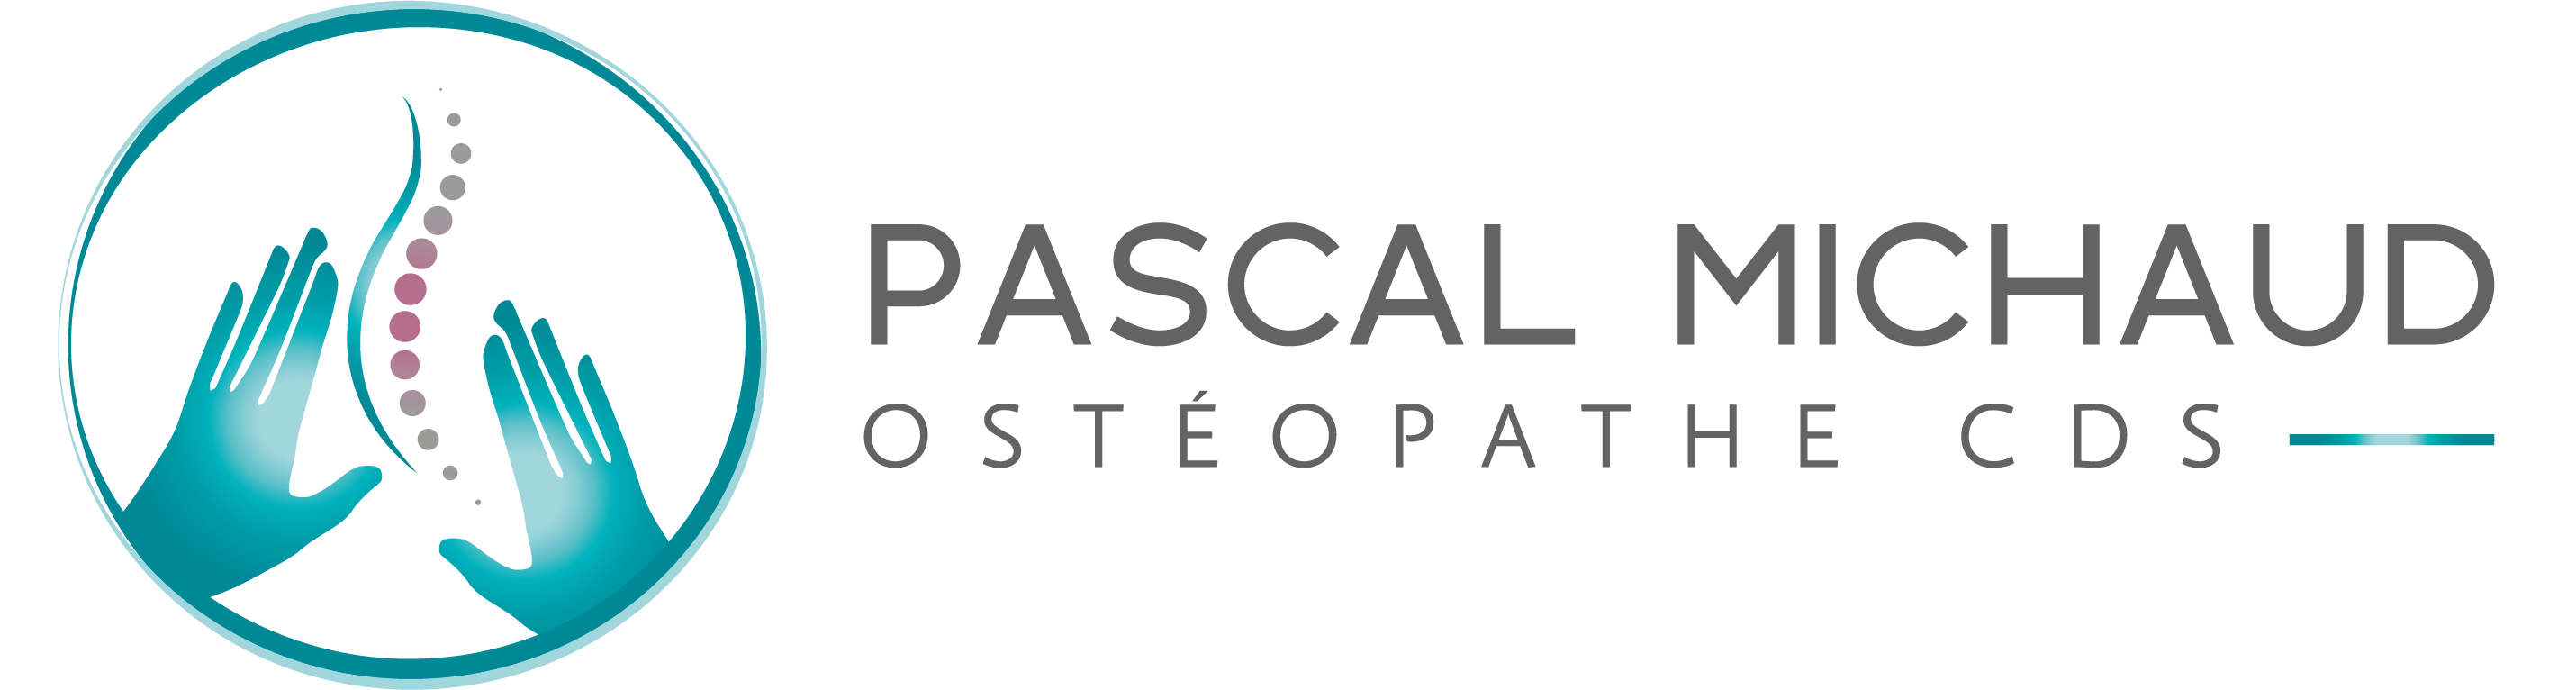 Pascal Michaud, Ostéopathe C.D.S